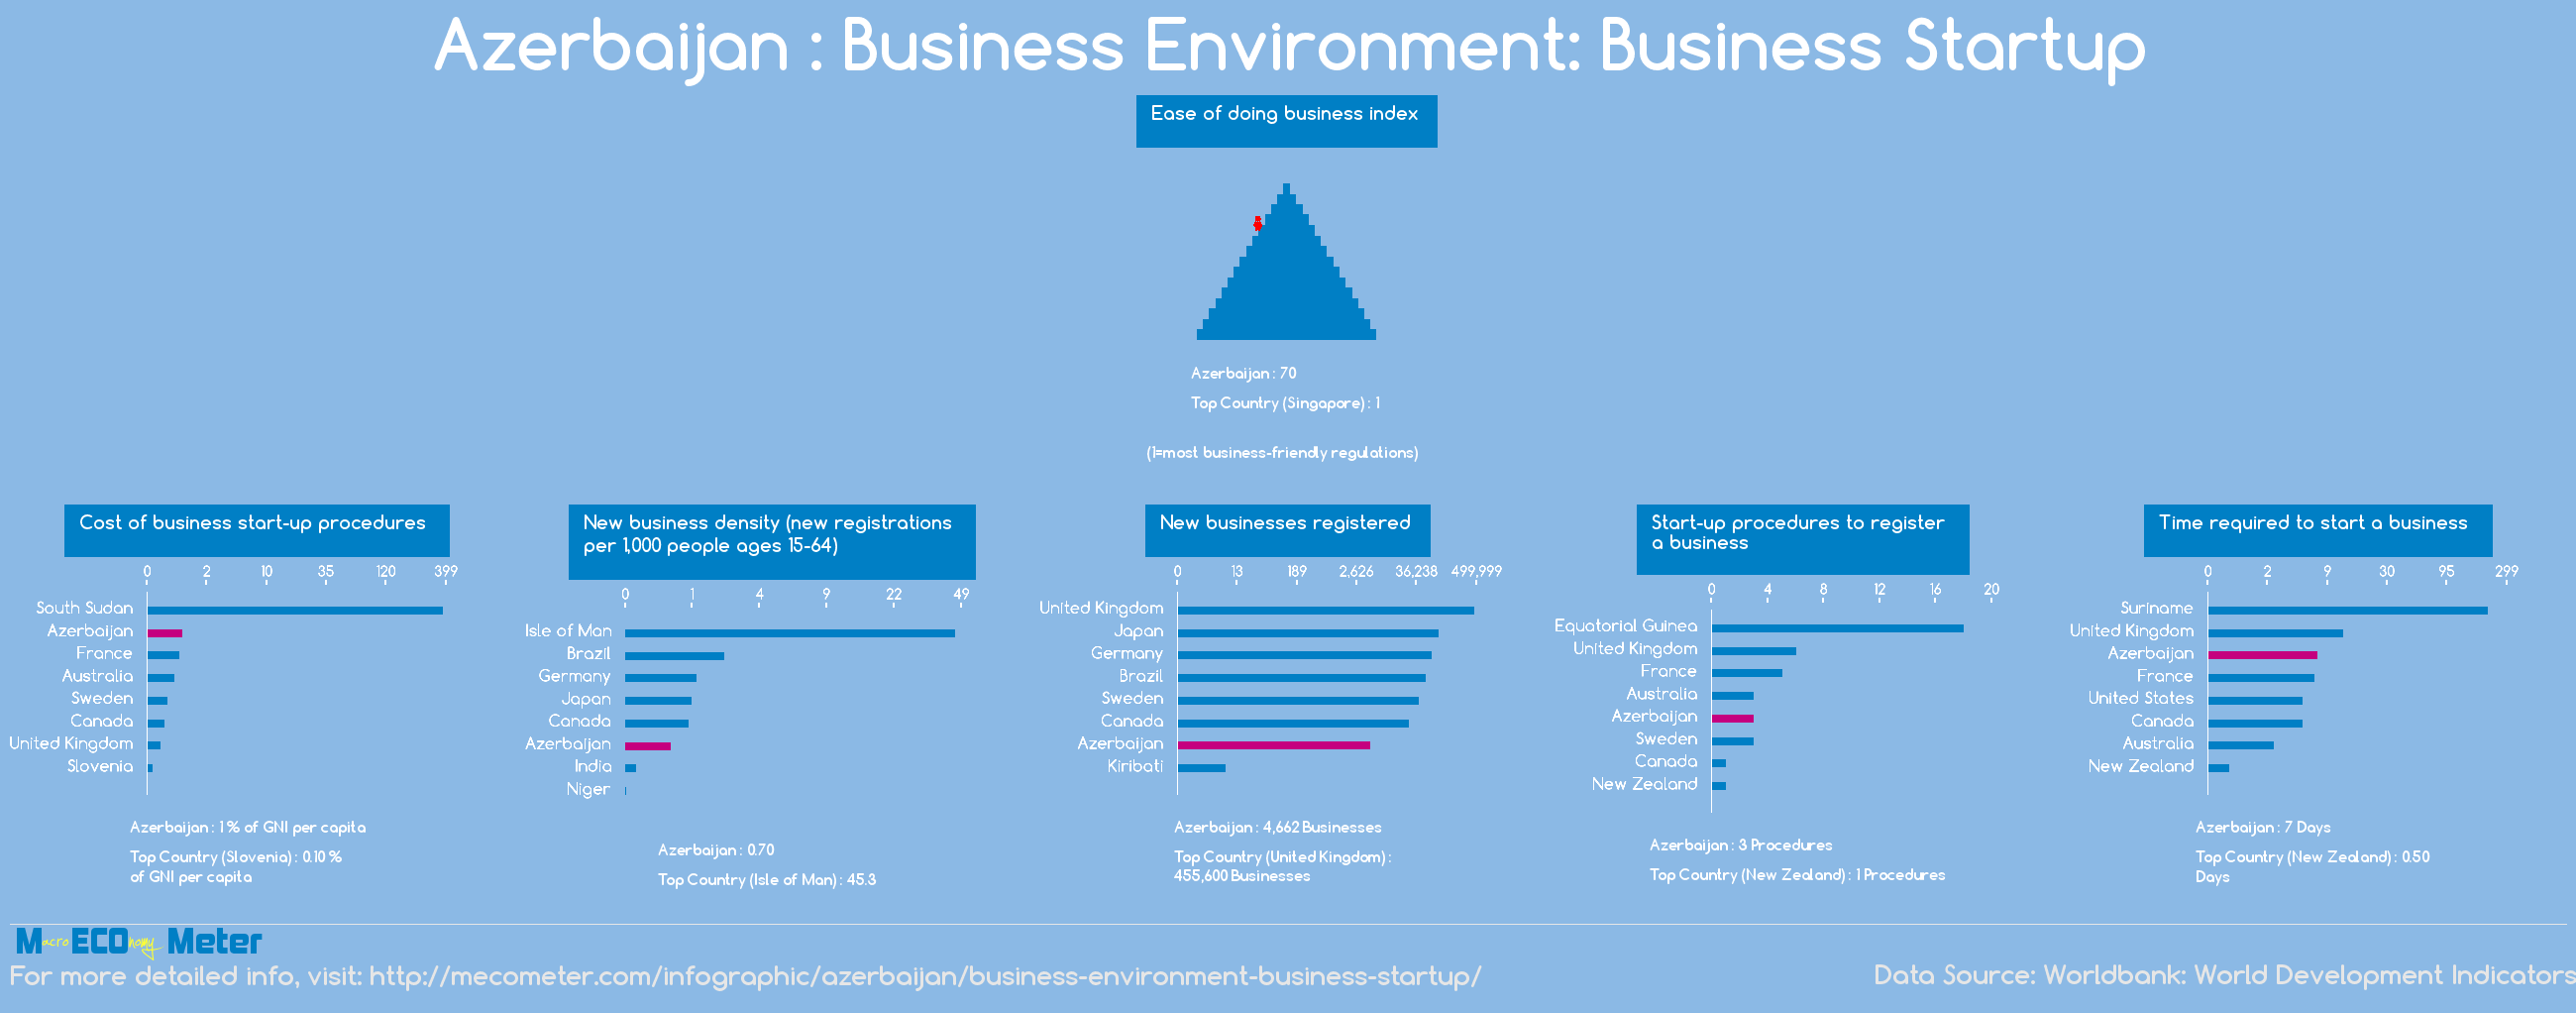 Azerbaijan : Business Environment: Business Startup